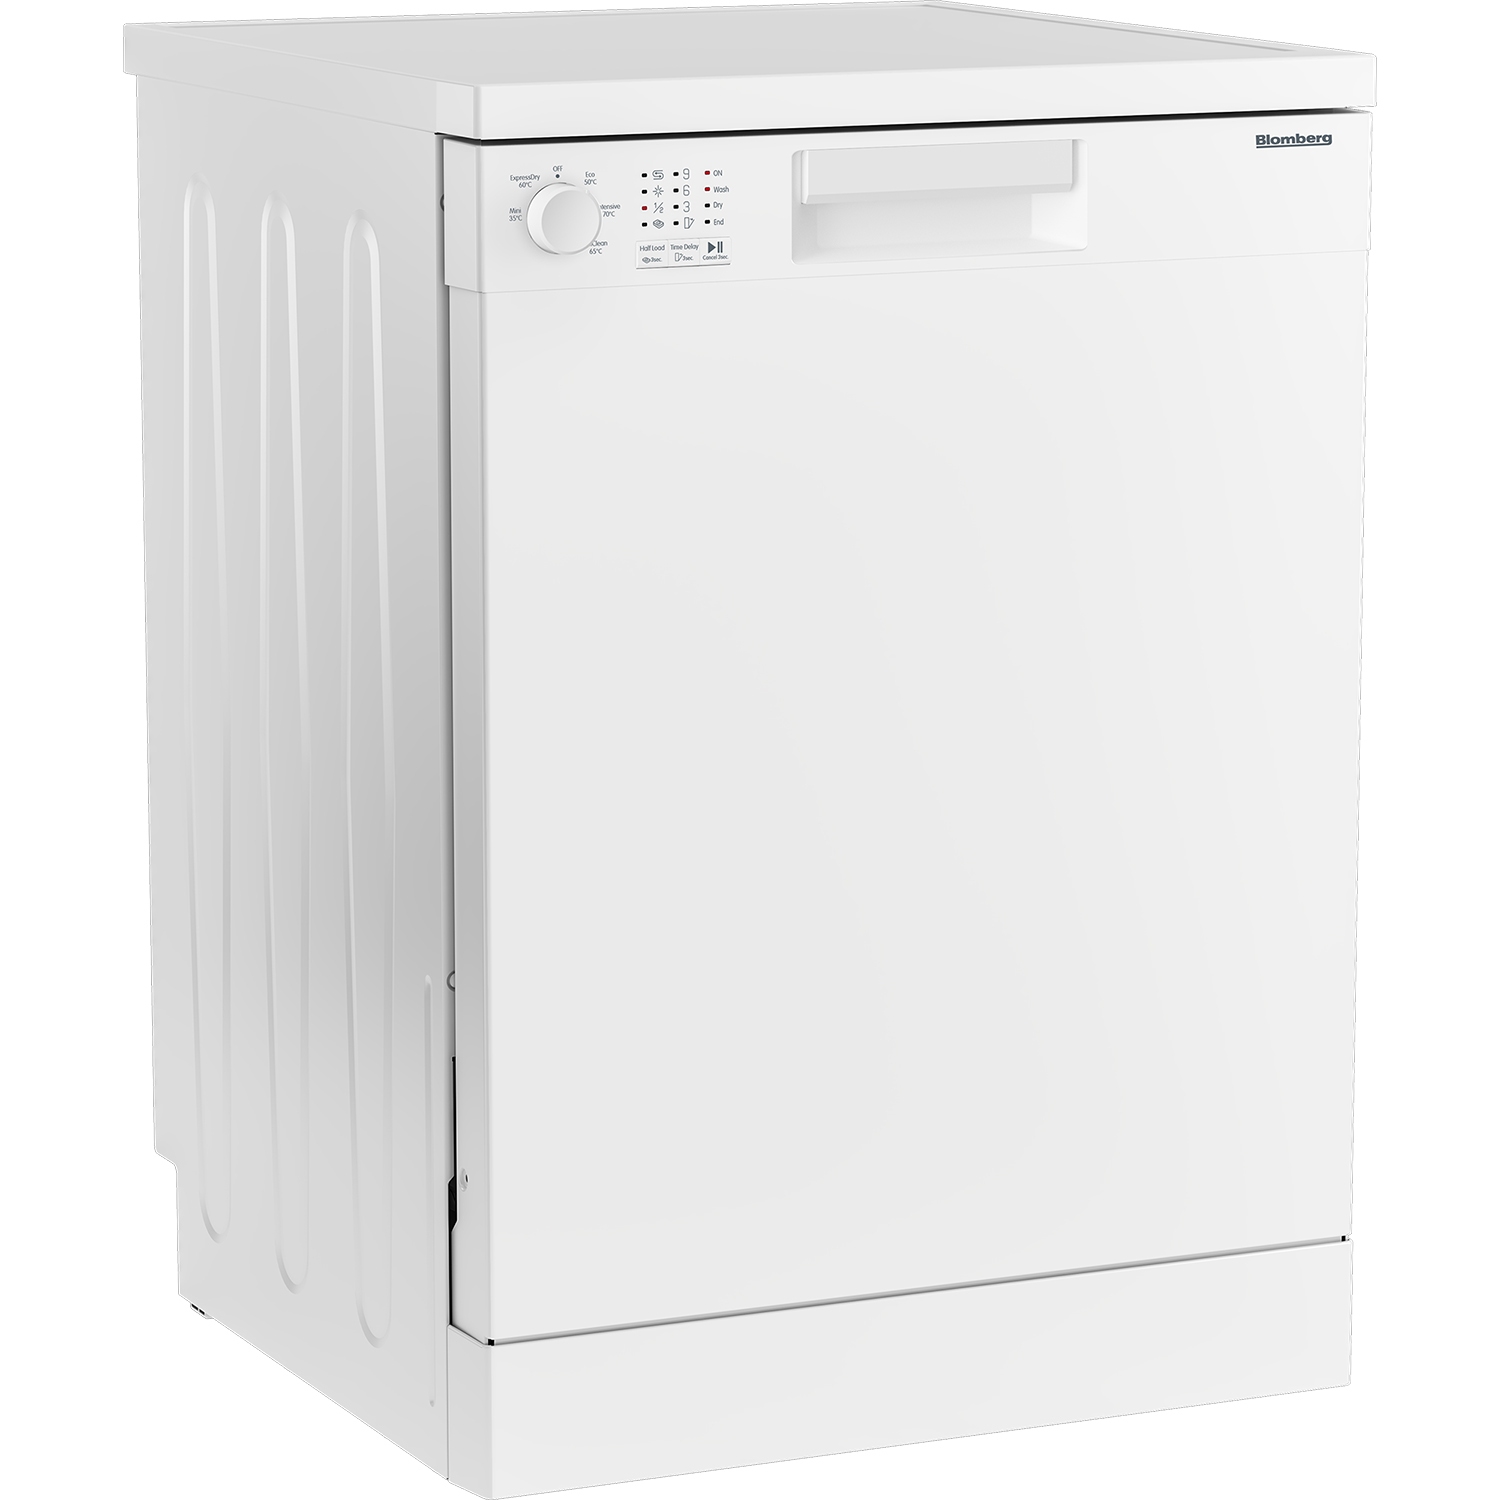 Blomberg LDF30210W Full Size Dishwasher - White - 14 Place Settings - 3